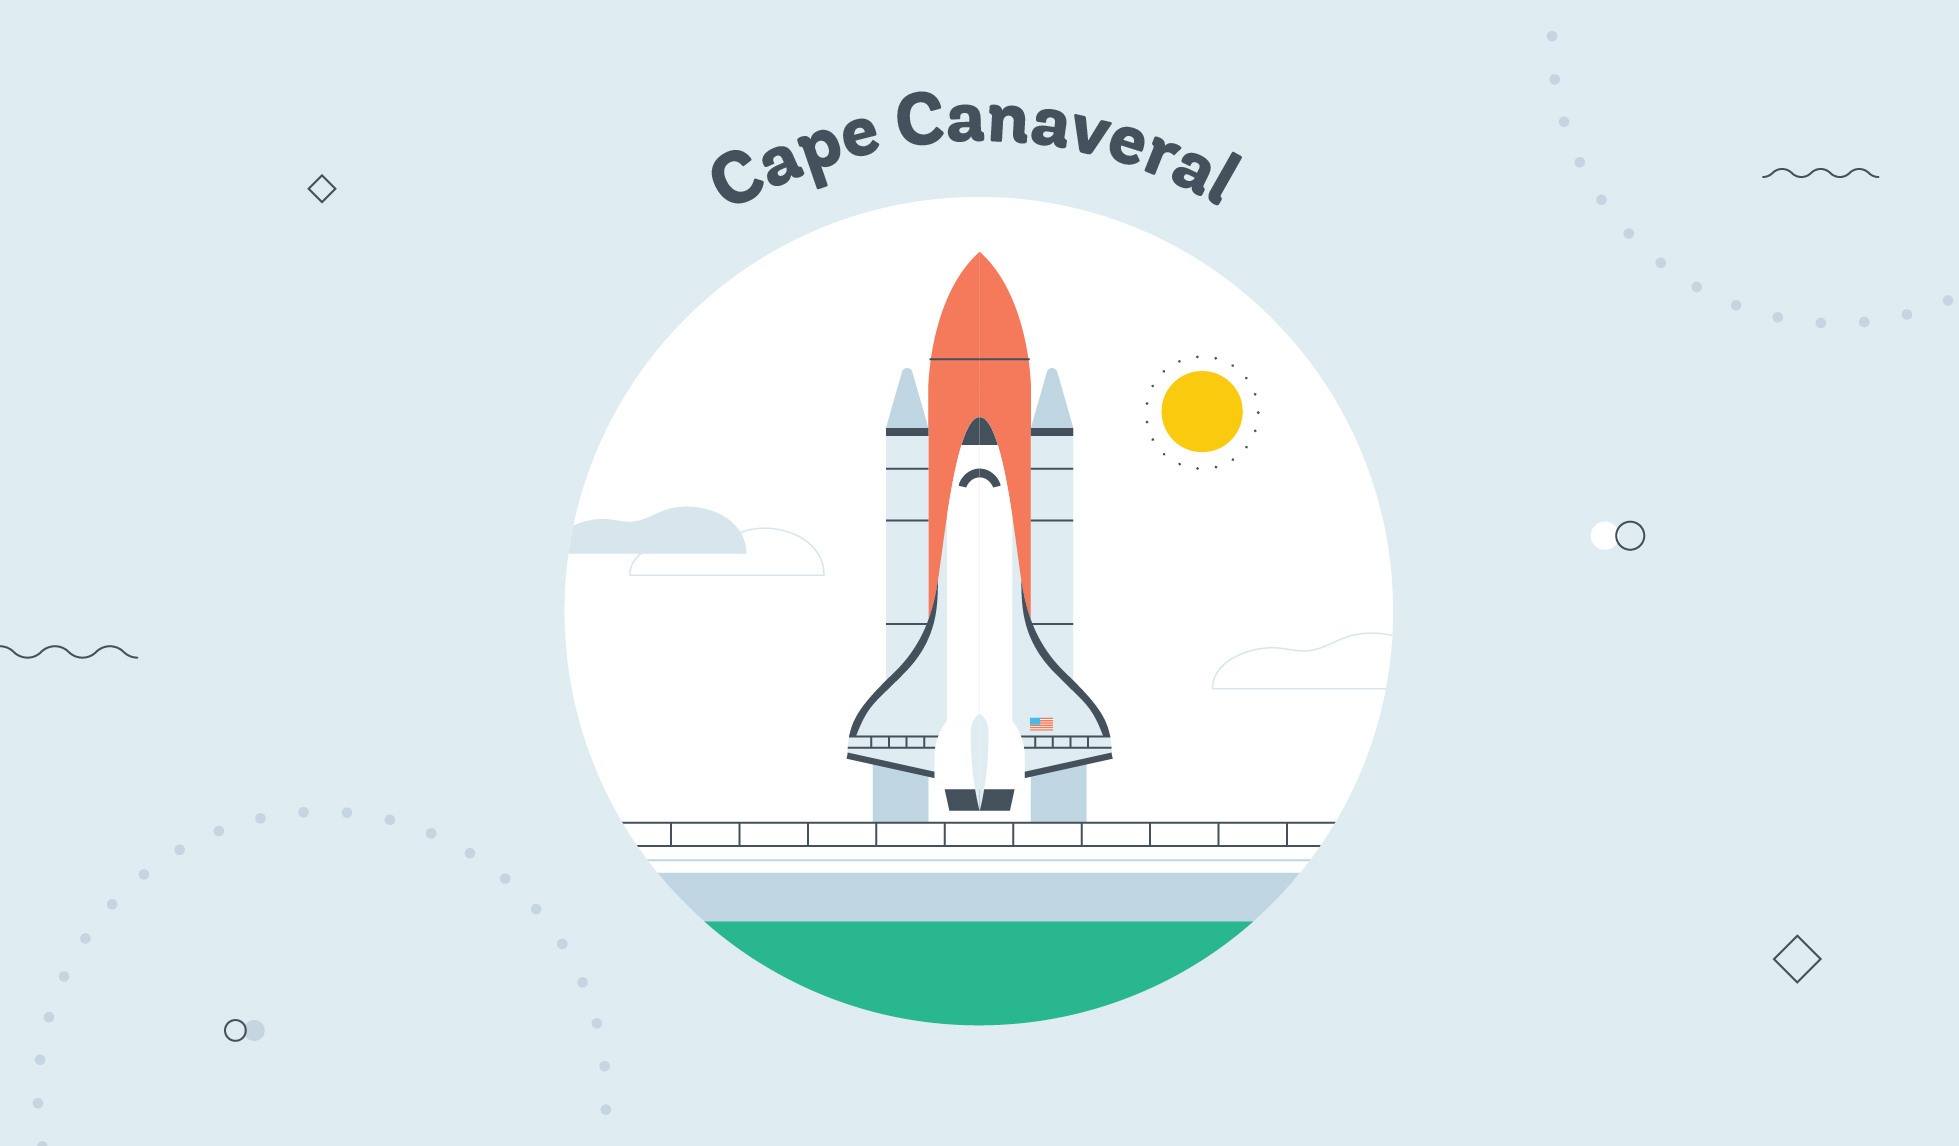 Cape Canaveral graphic